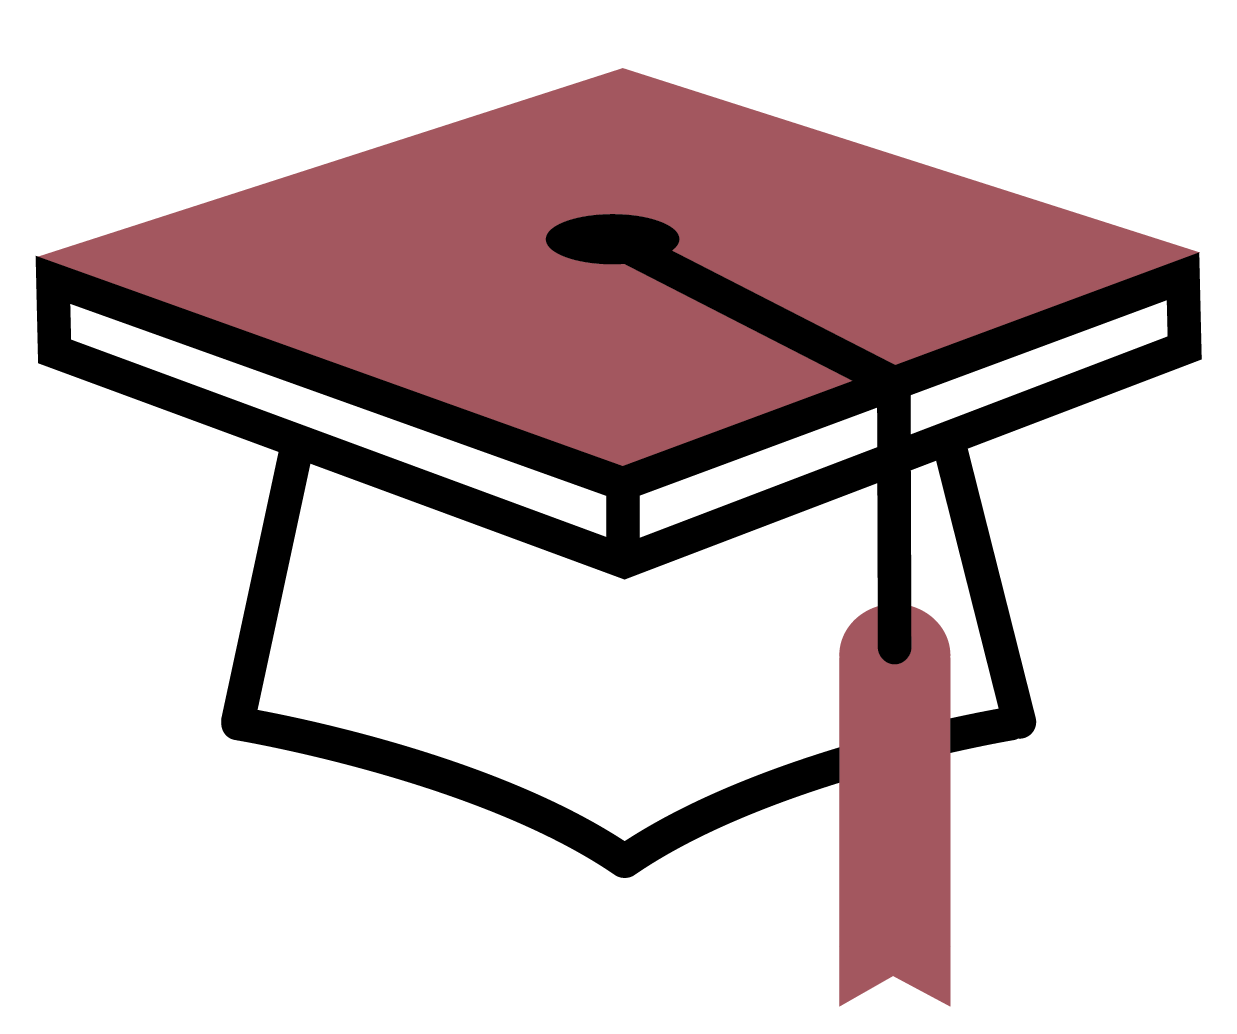 graduation cap with tassel icon